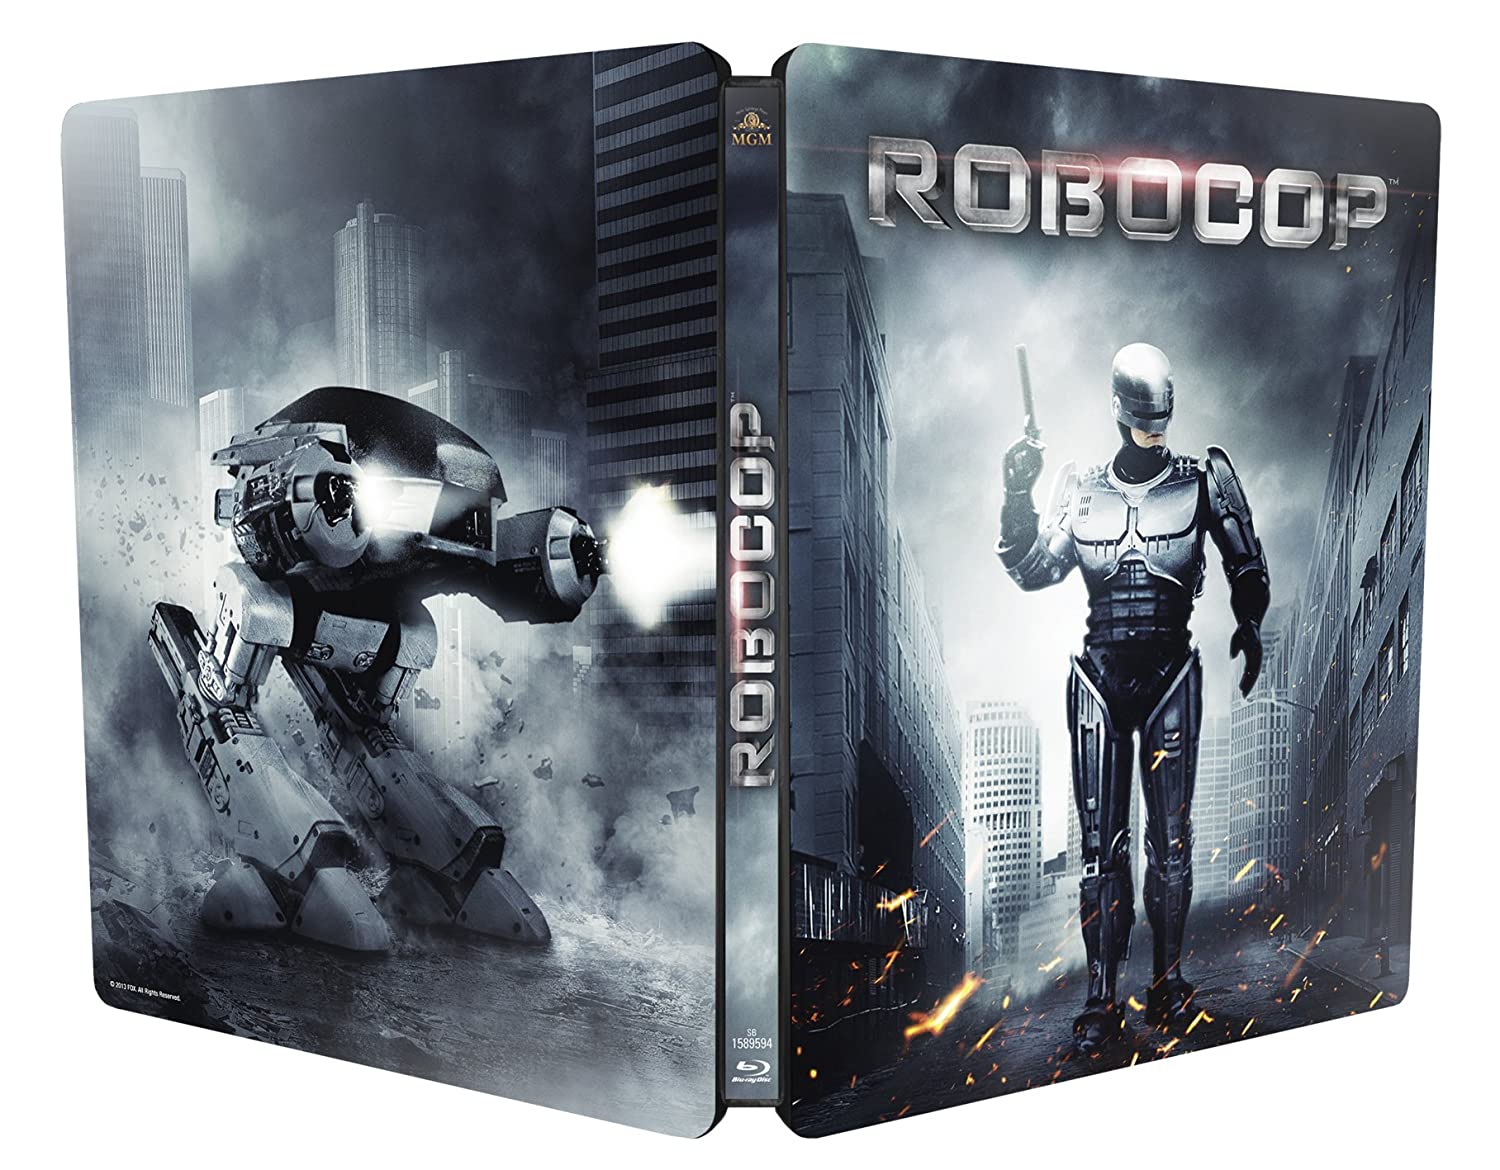 Robocop : 20th Anniversary Collector’s Edition 21/08/07 Z1 812qImzIl1L._SL1500_